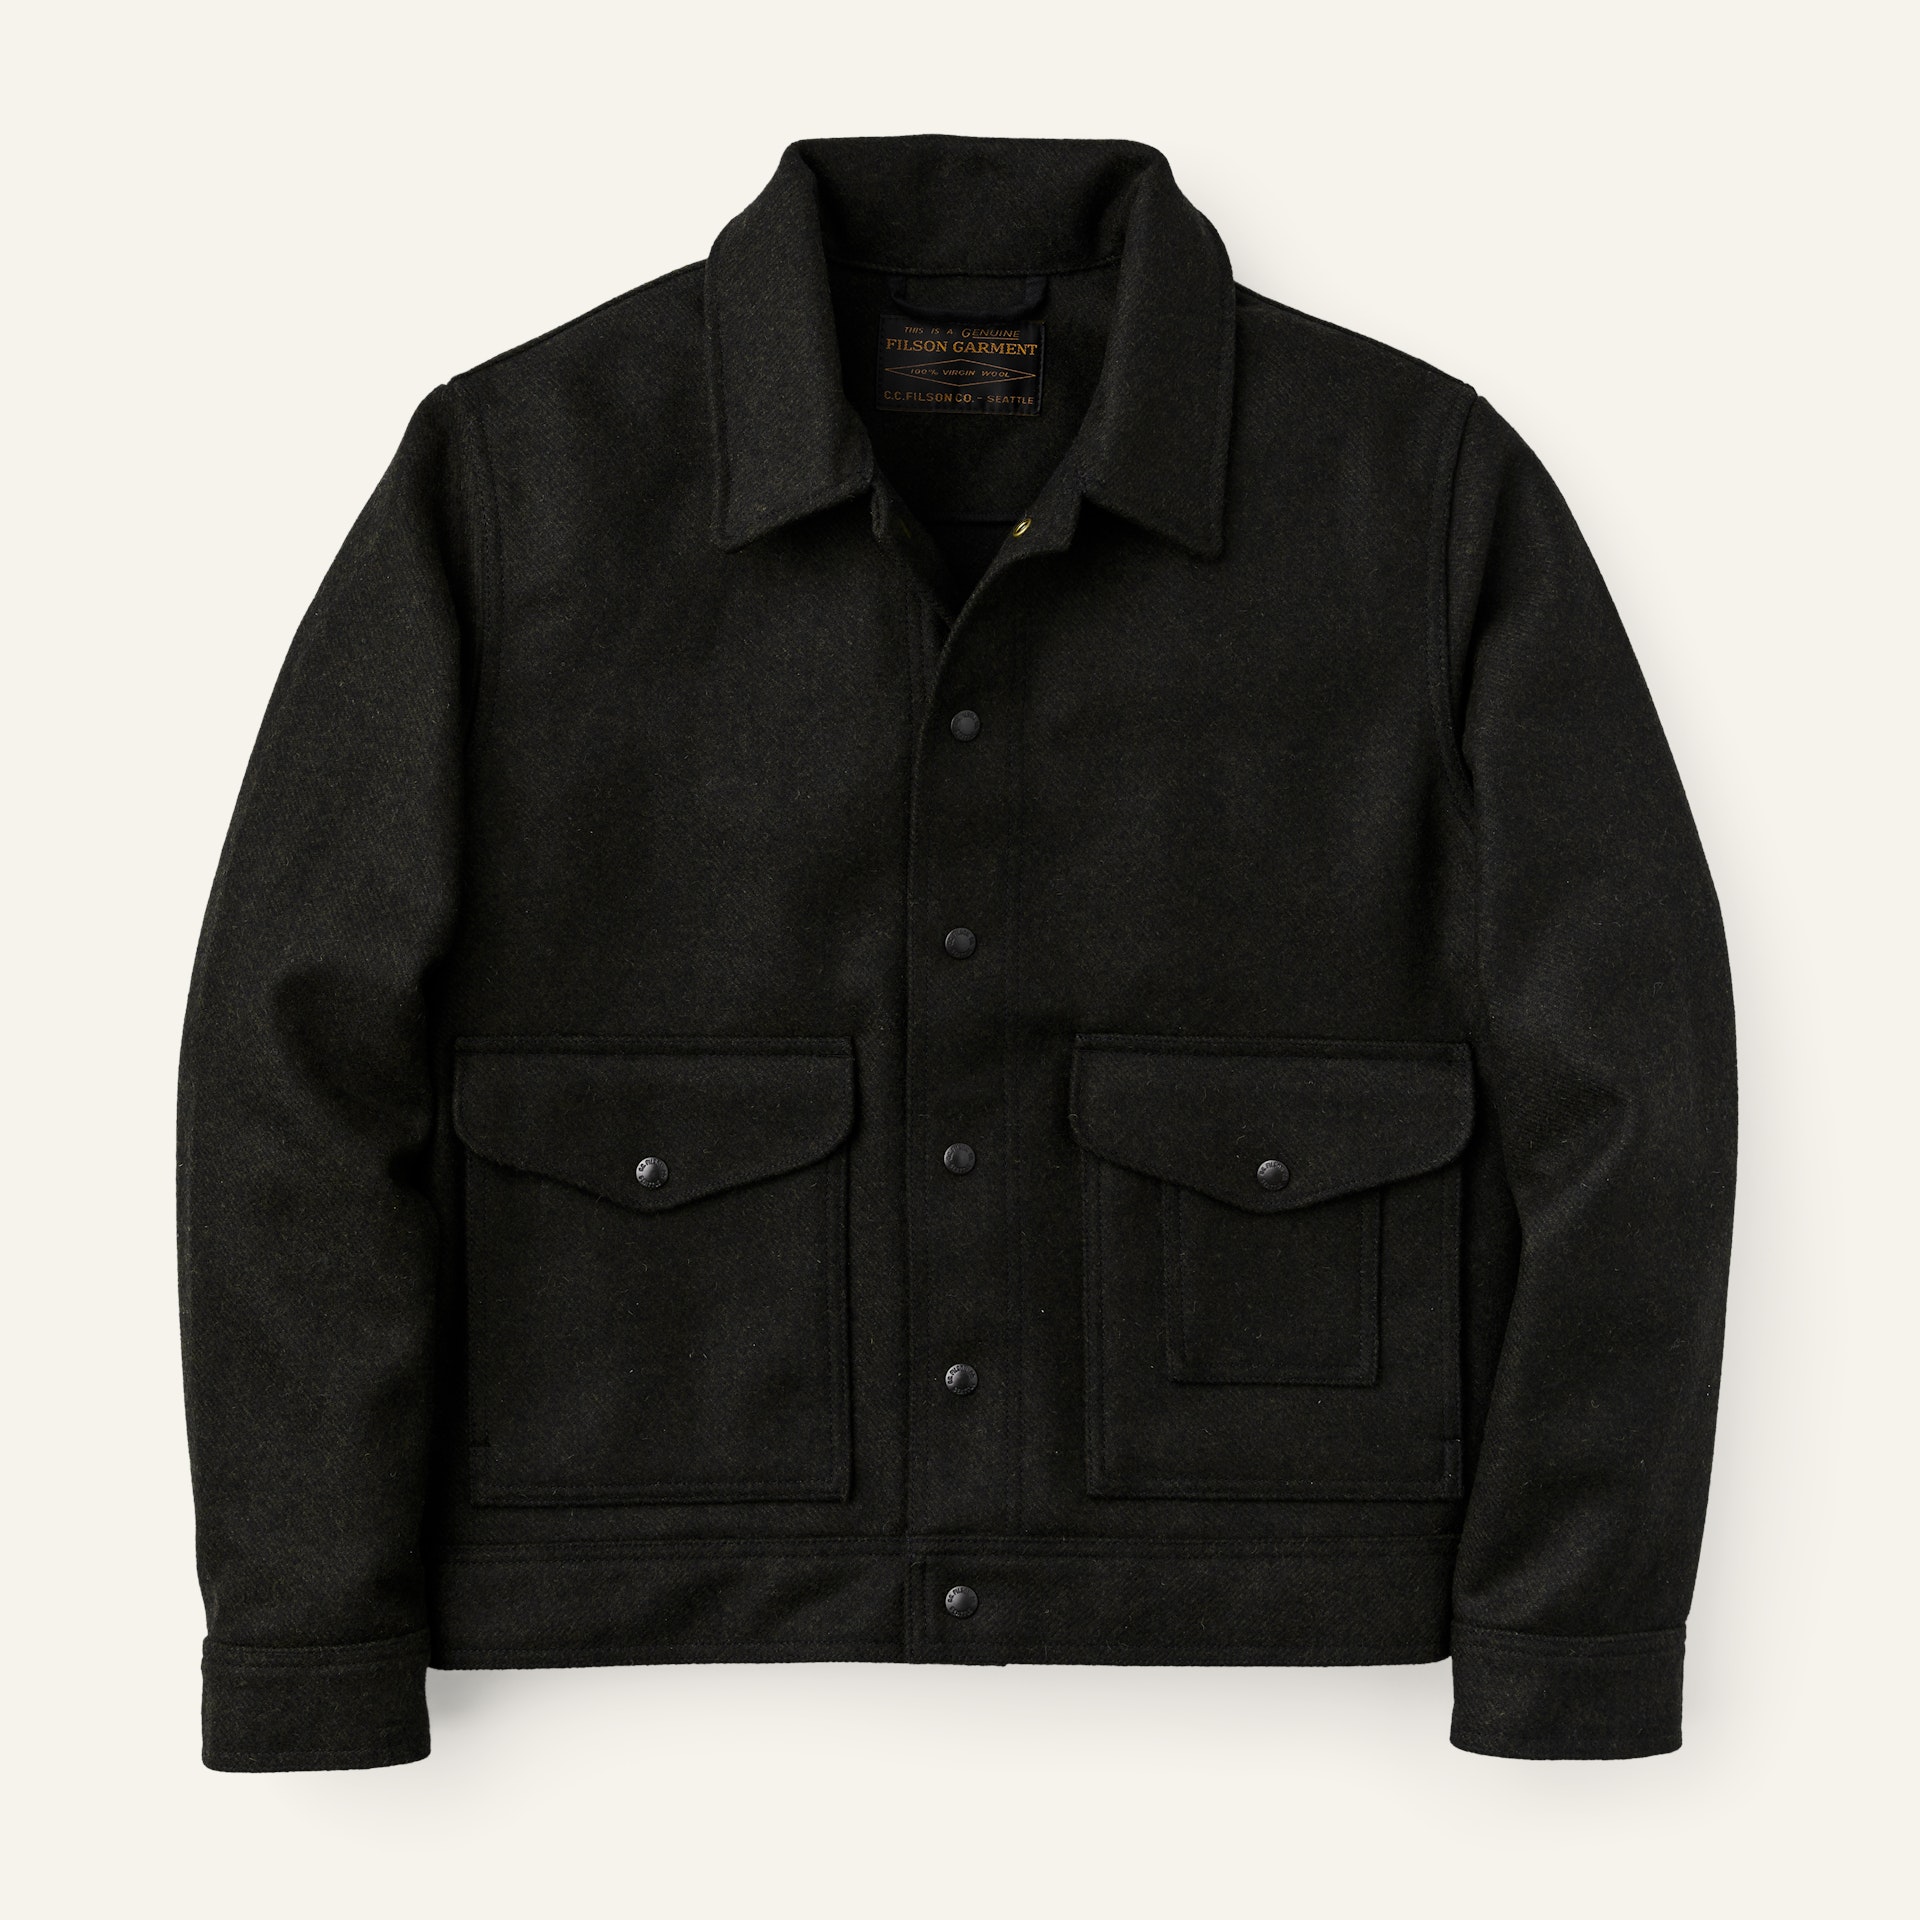 1940s Men’s Clothing & Fashion History Mackinaw Wool Work Jacket $455.00 AT vintagedancer.com